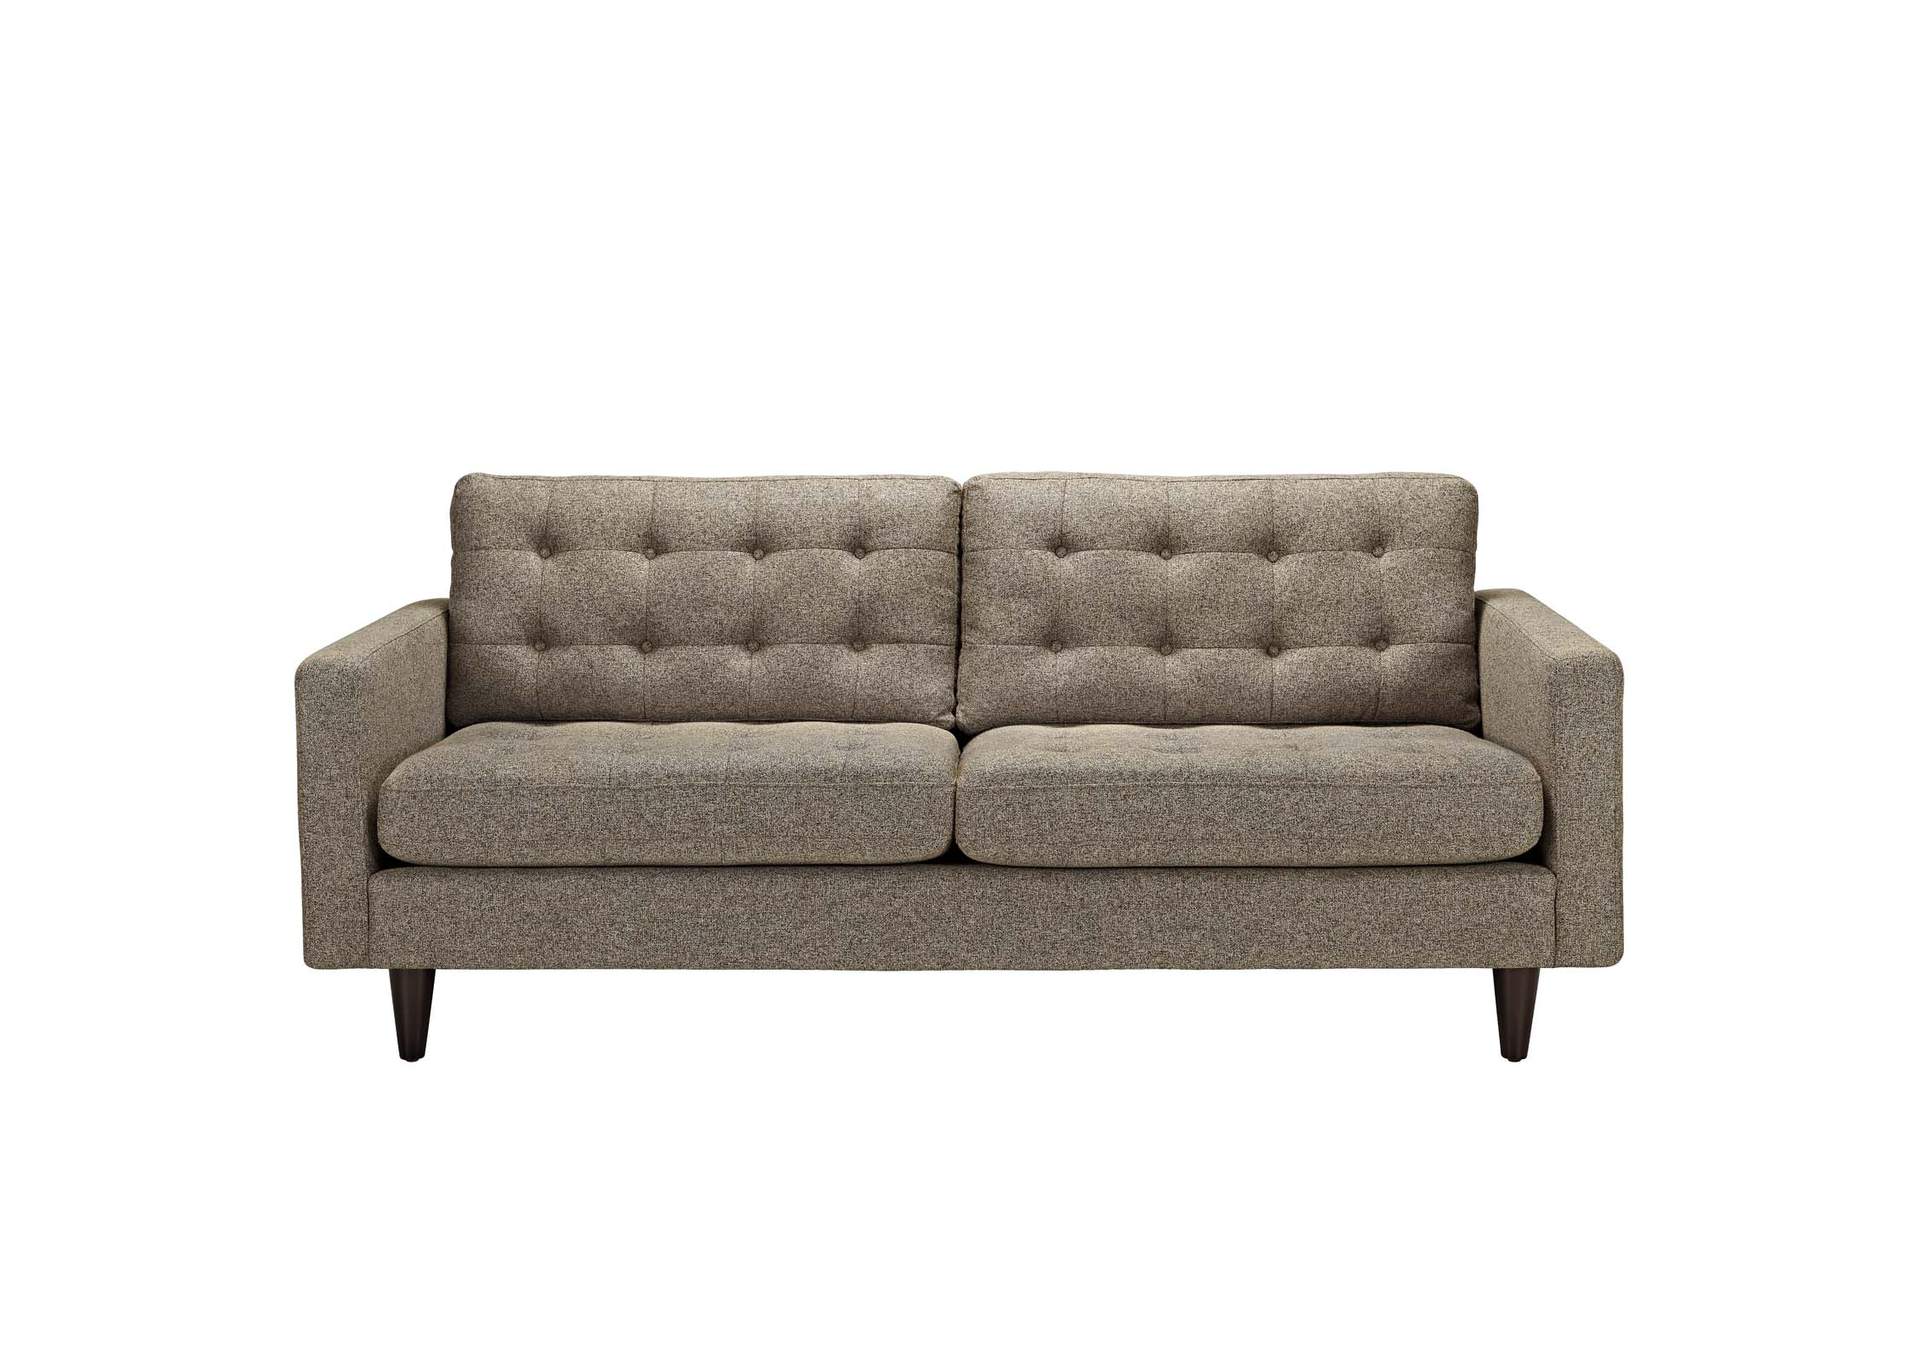 Oatmeal Empress Upholstered Fabric Sofa,Modway